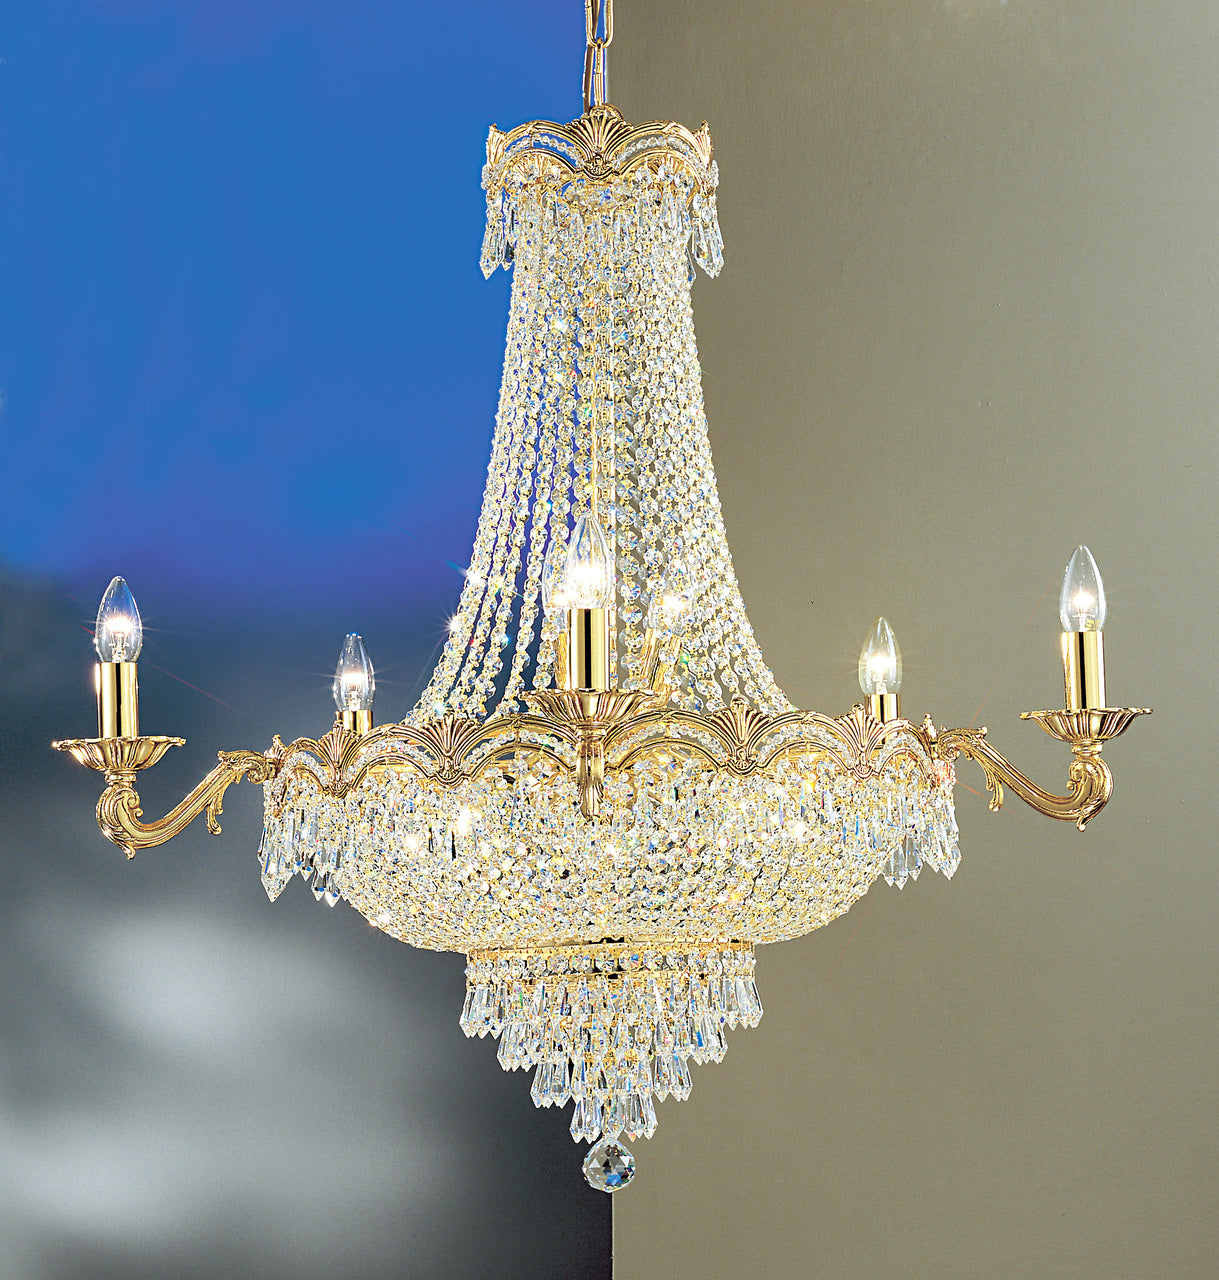 Classic Lighting 1859 G CGT Regency II Crystal Chandelier in 24k Gold (Imported from Spain)